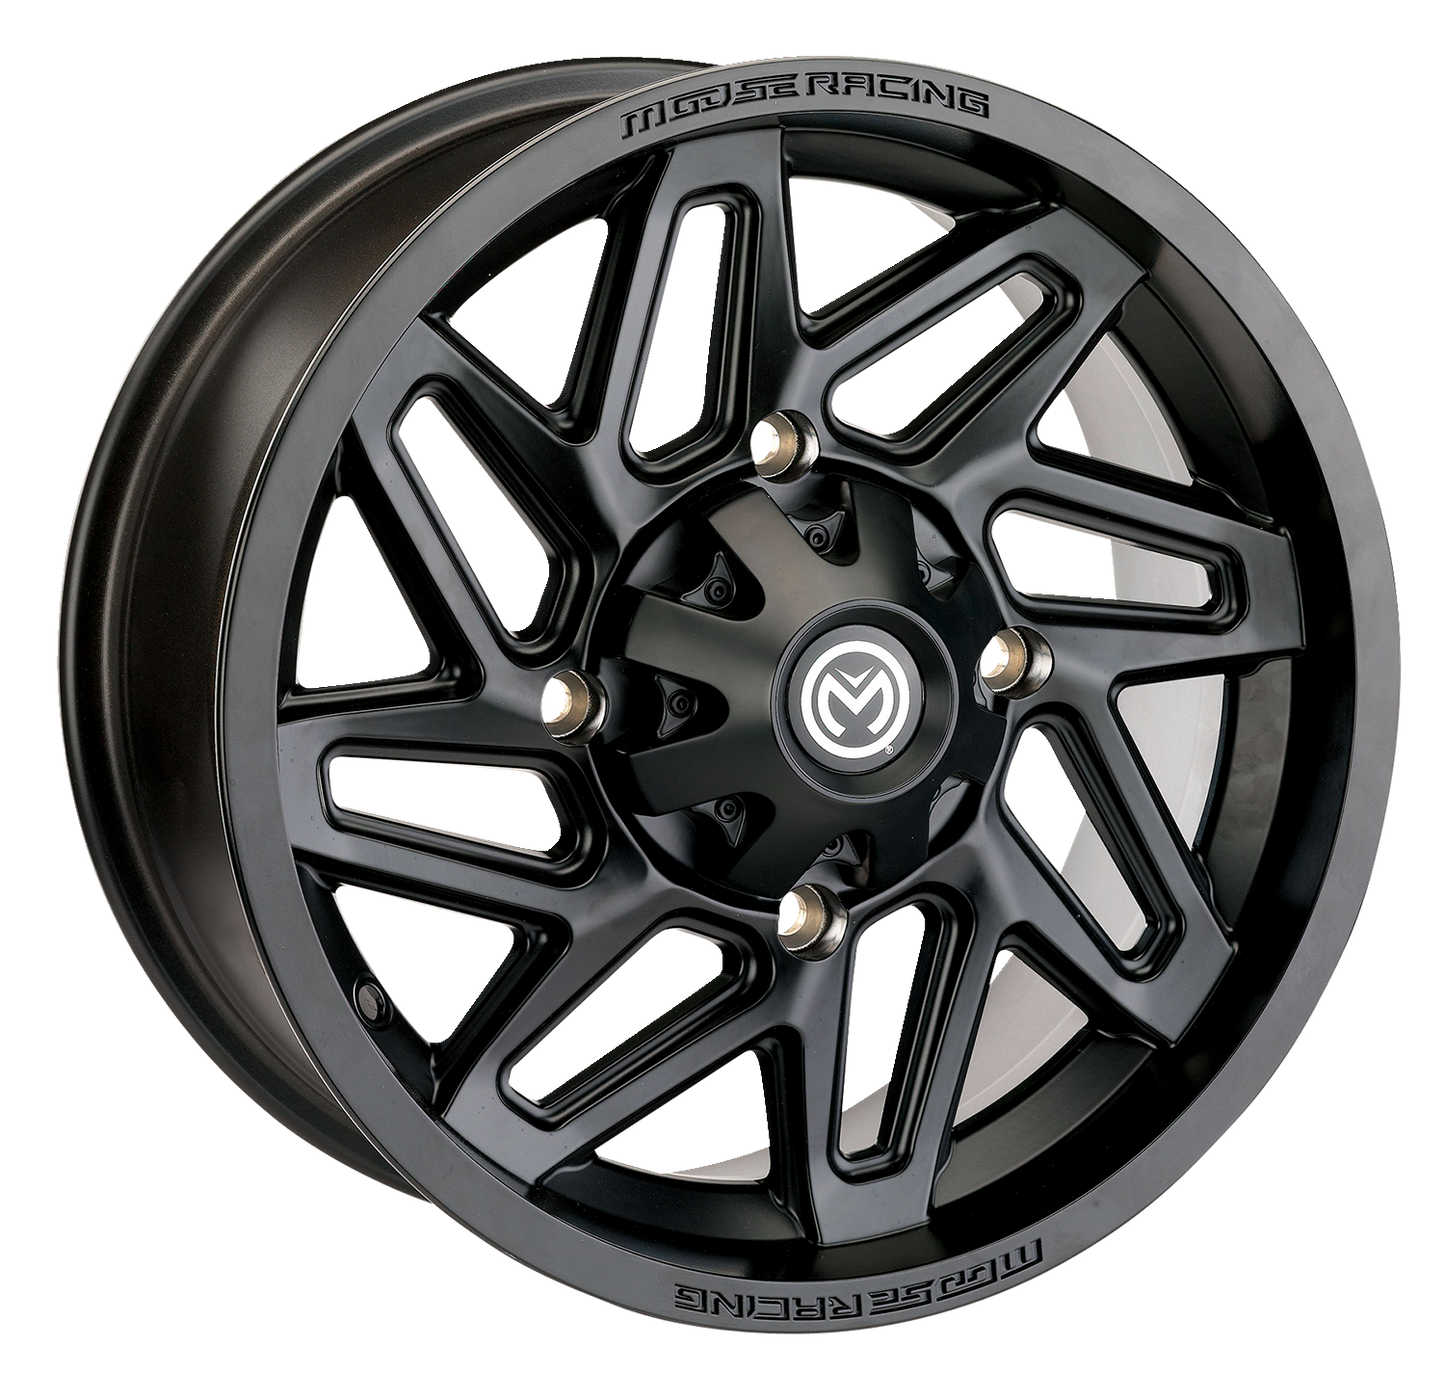 MOOSE UTILITY Wheel - 361X - Front/Rear - Black - 14x7 - 4/110 - 5+2 361MO147110MB55